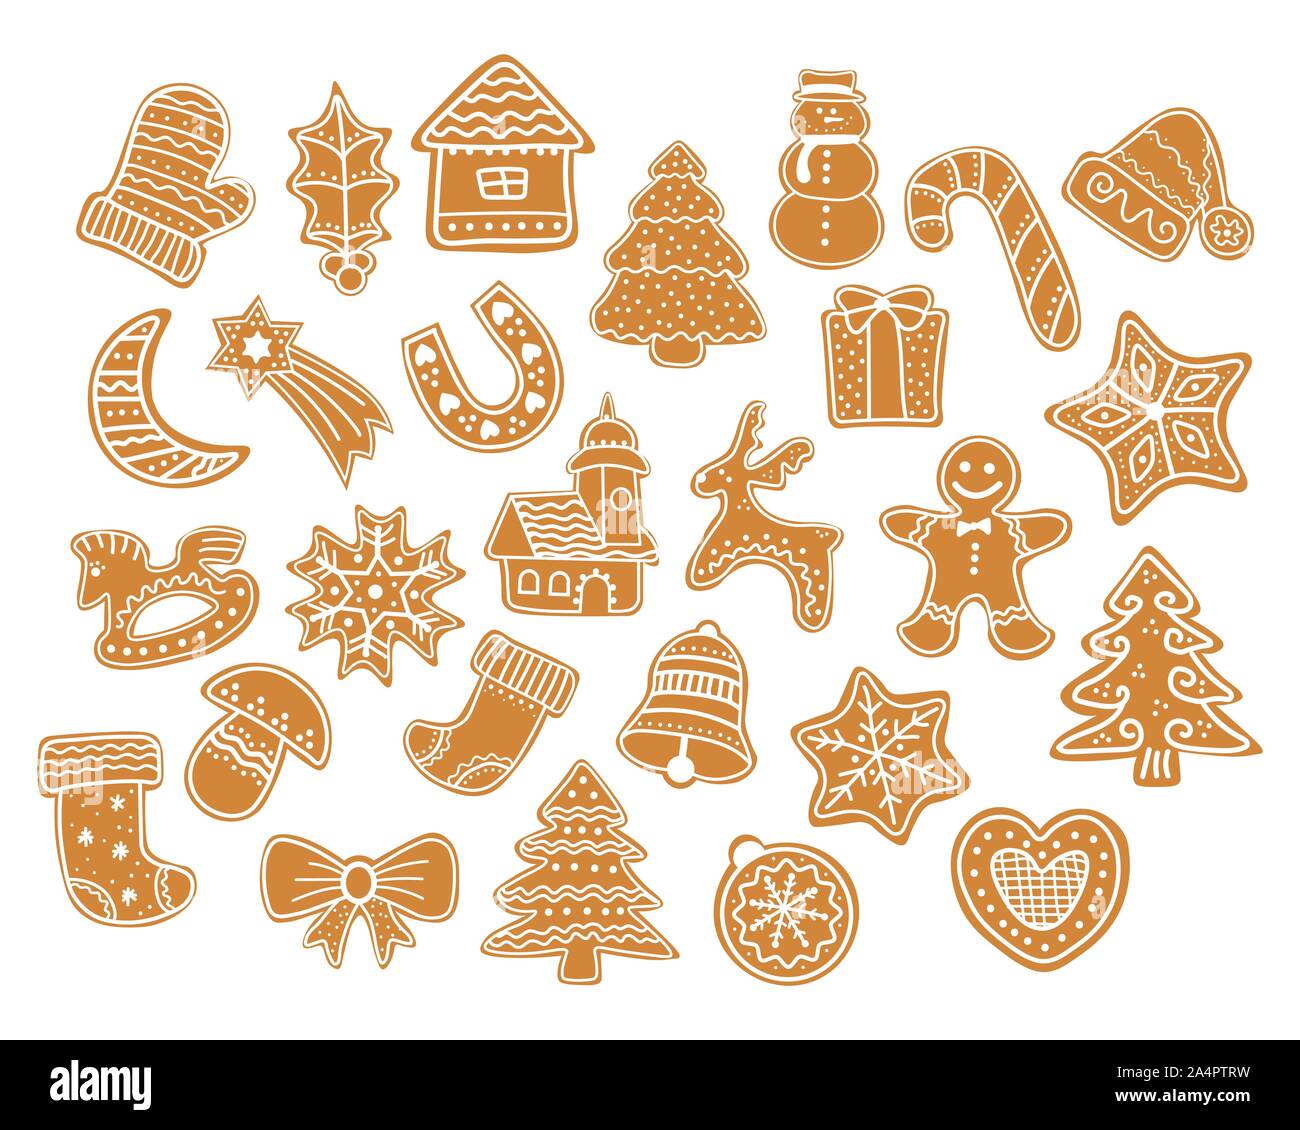 Set of Gingerbread cookies Christmas. Christmas cookies collection with gingerbread cookies figures. Stock Vector